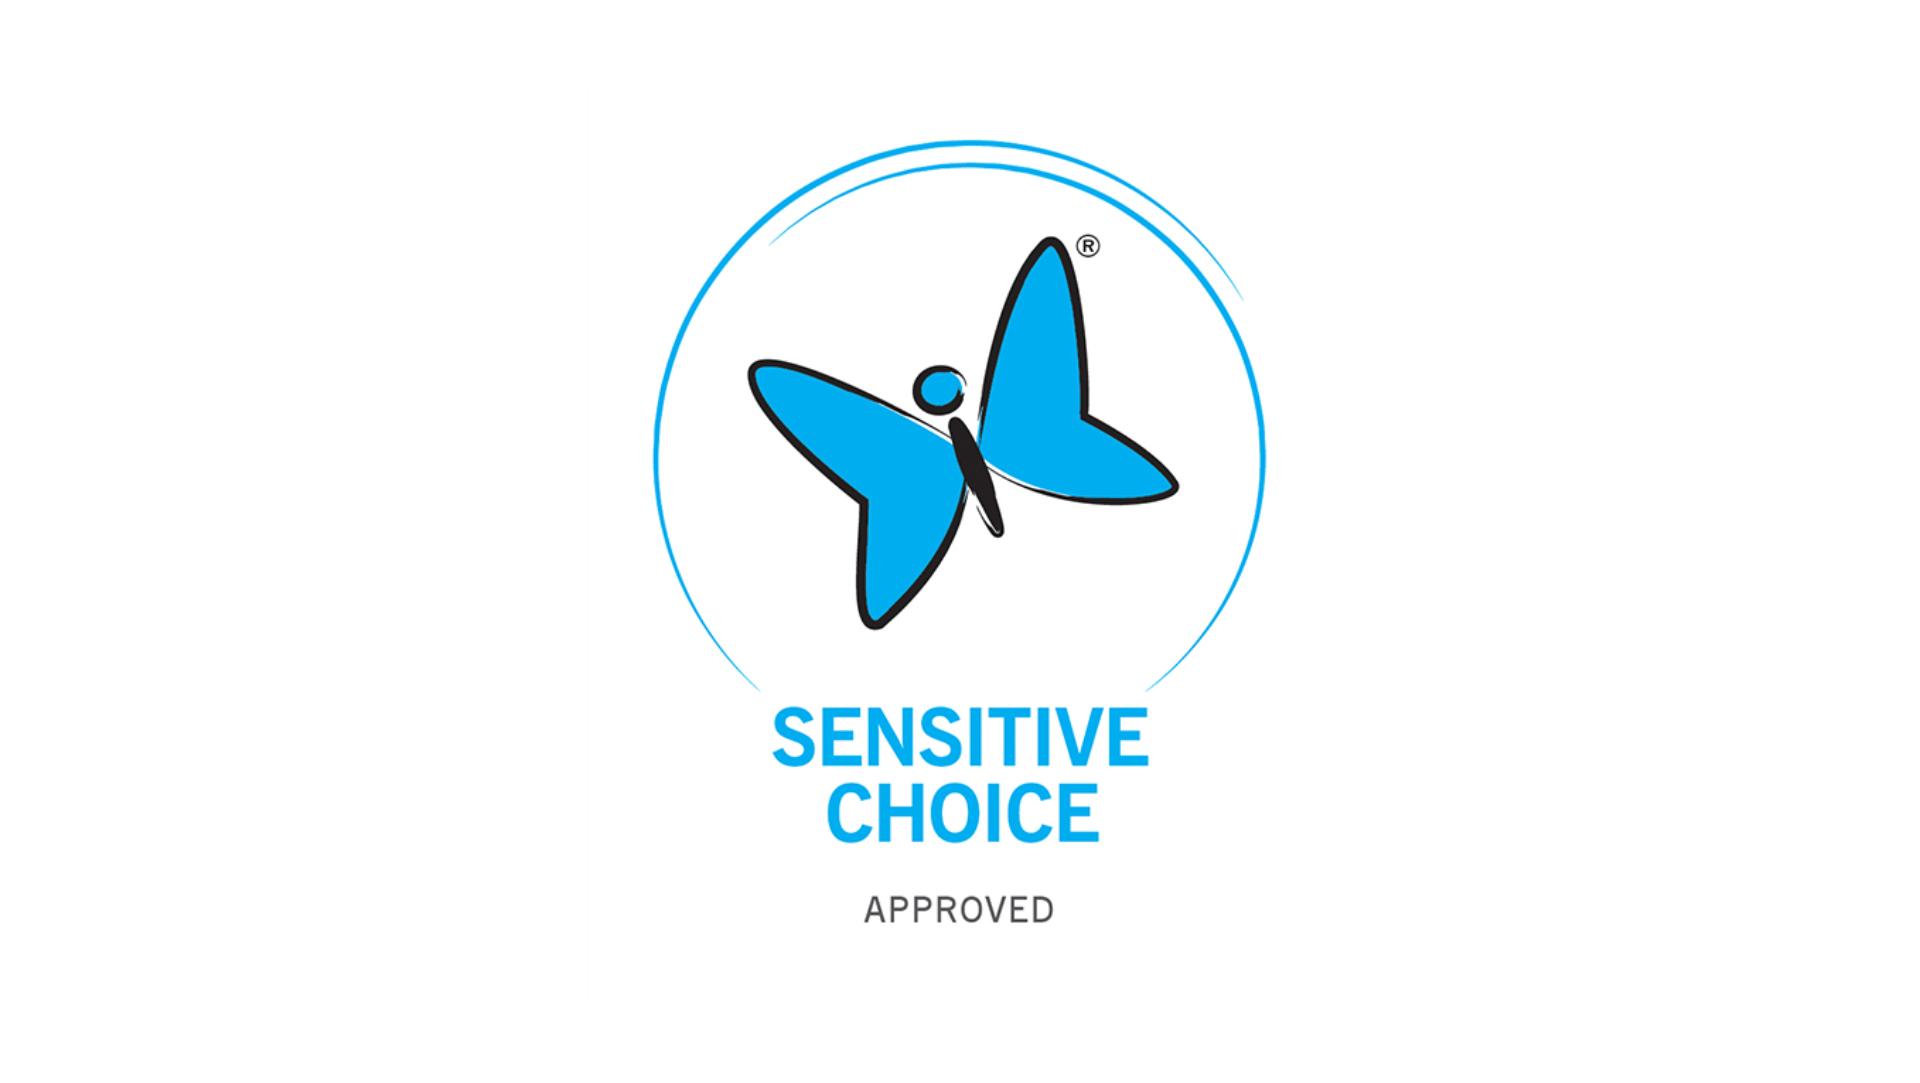 Sensitive choice approved purifier logo 